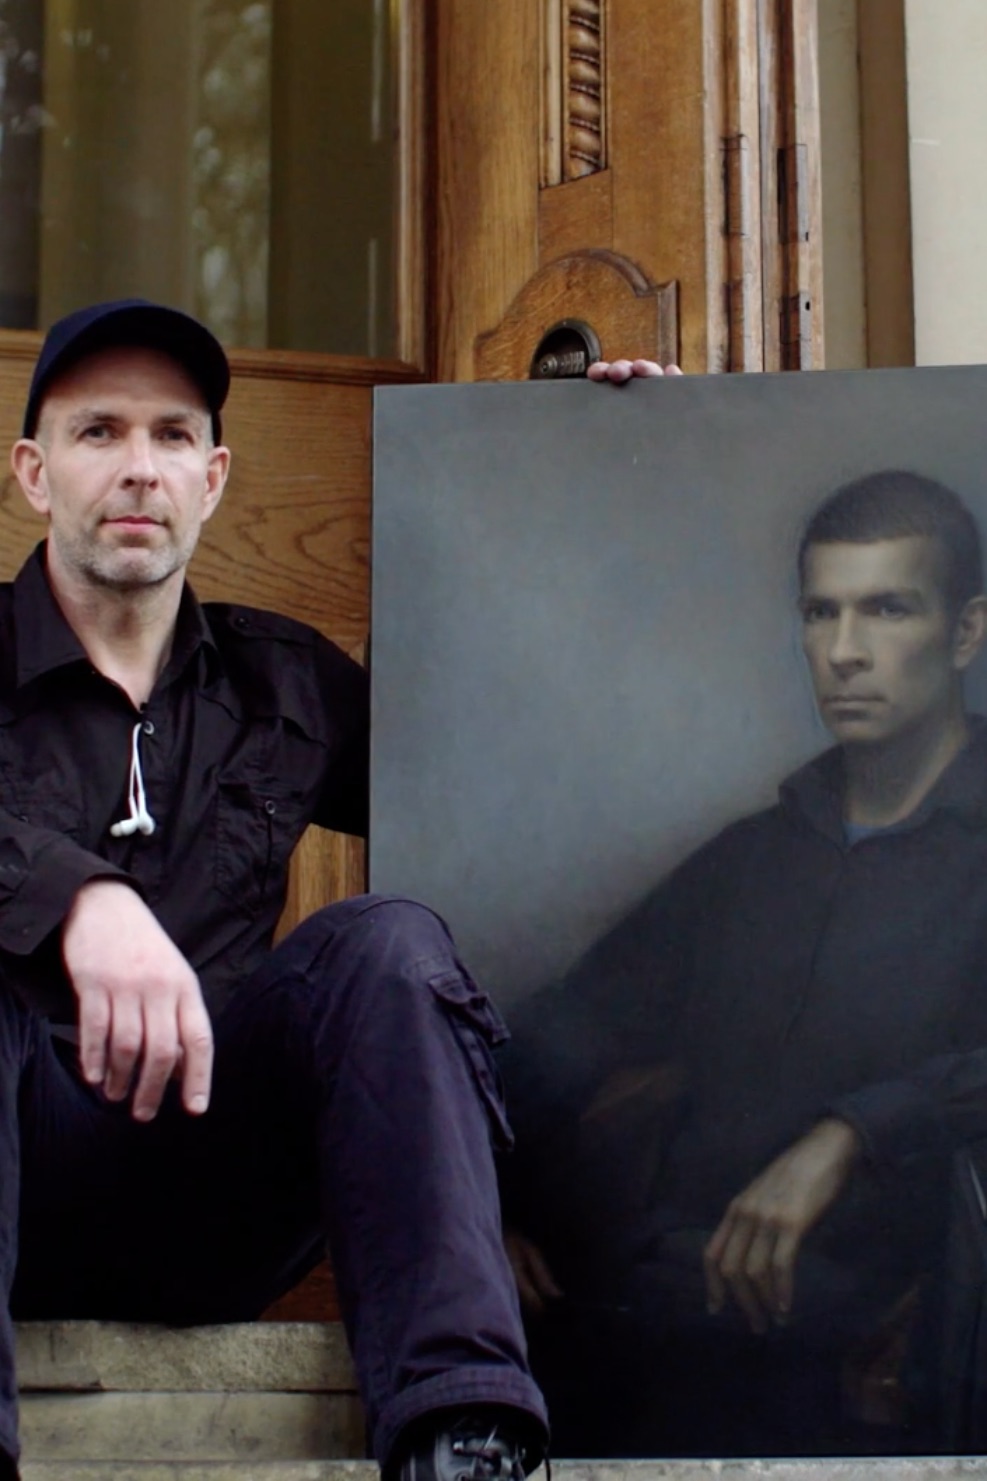 Marcus Callum Portrait artist of the year series